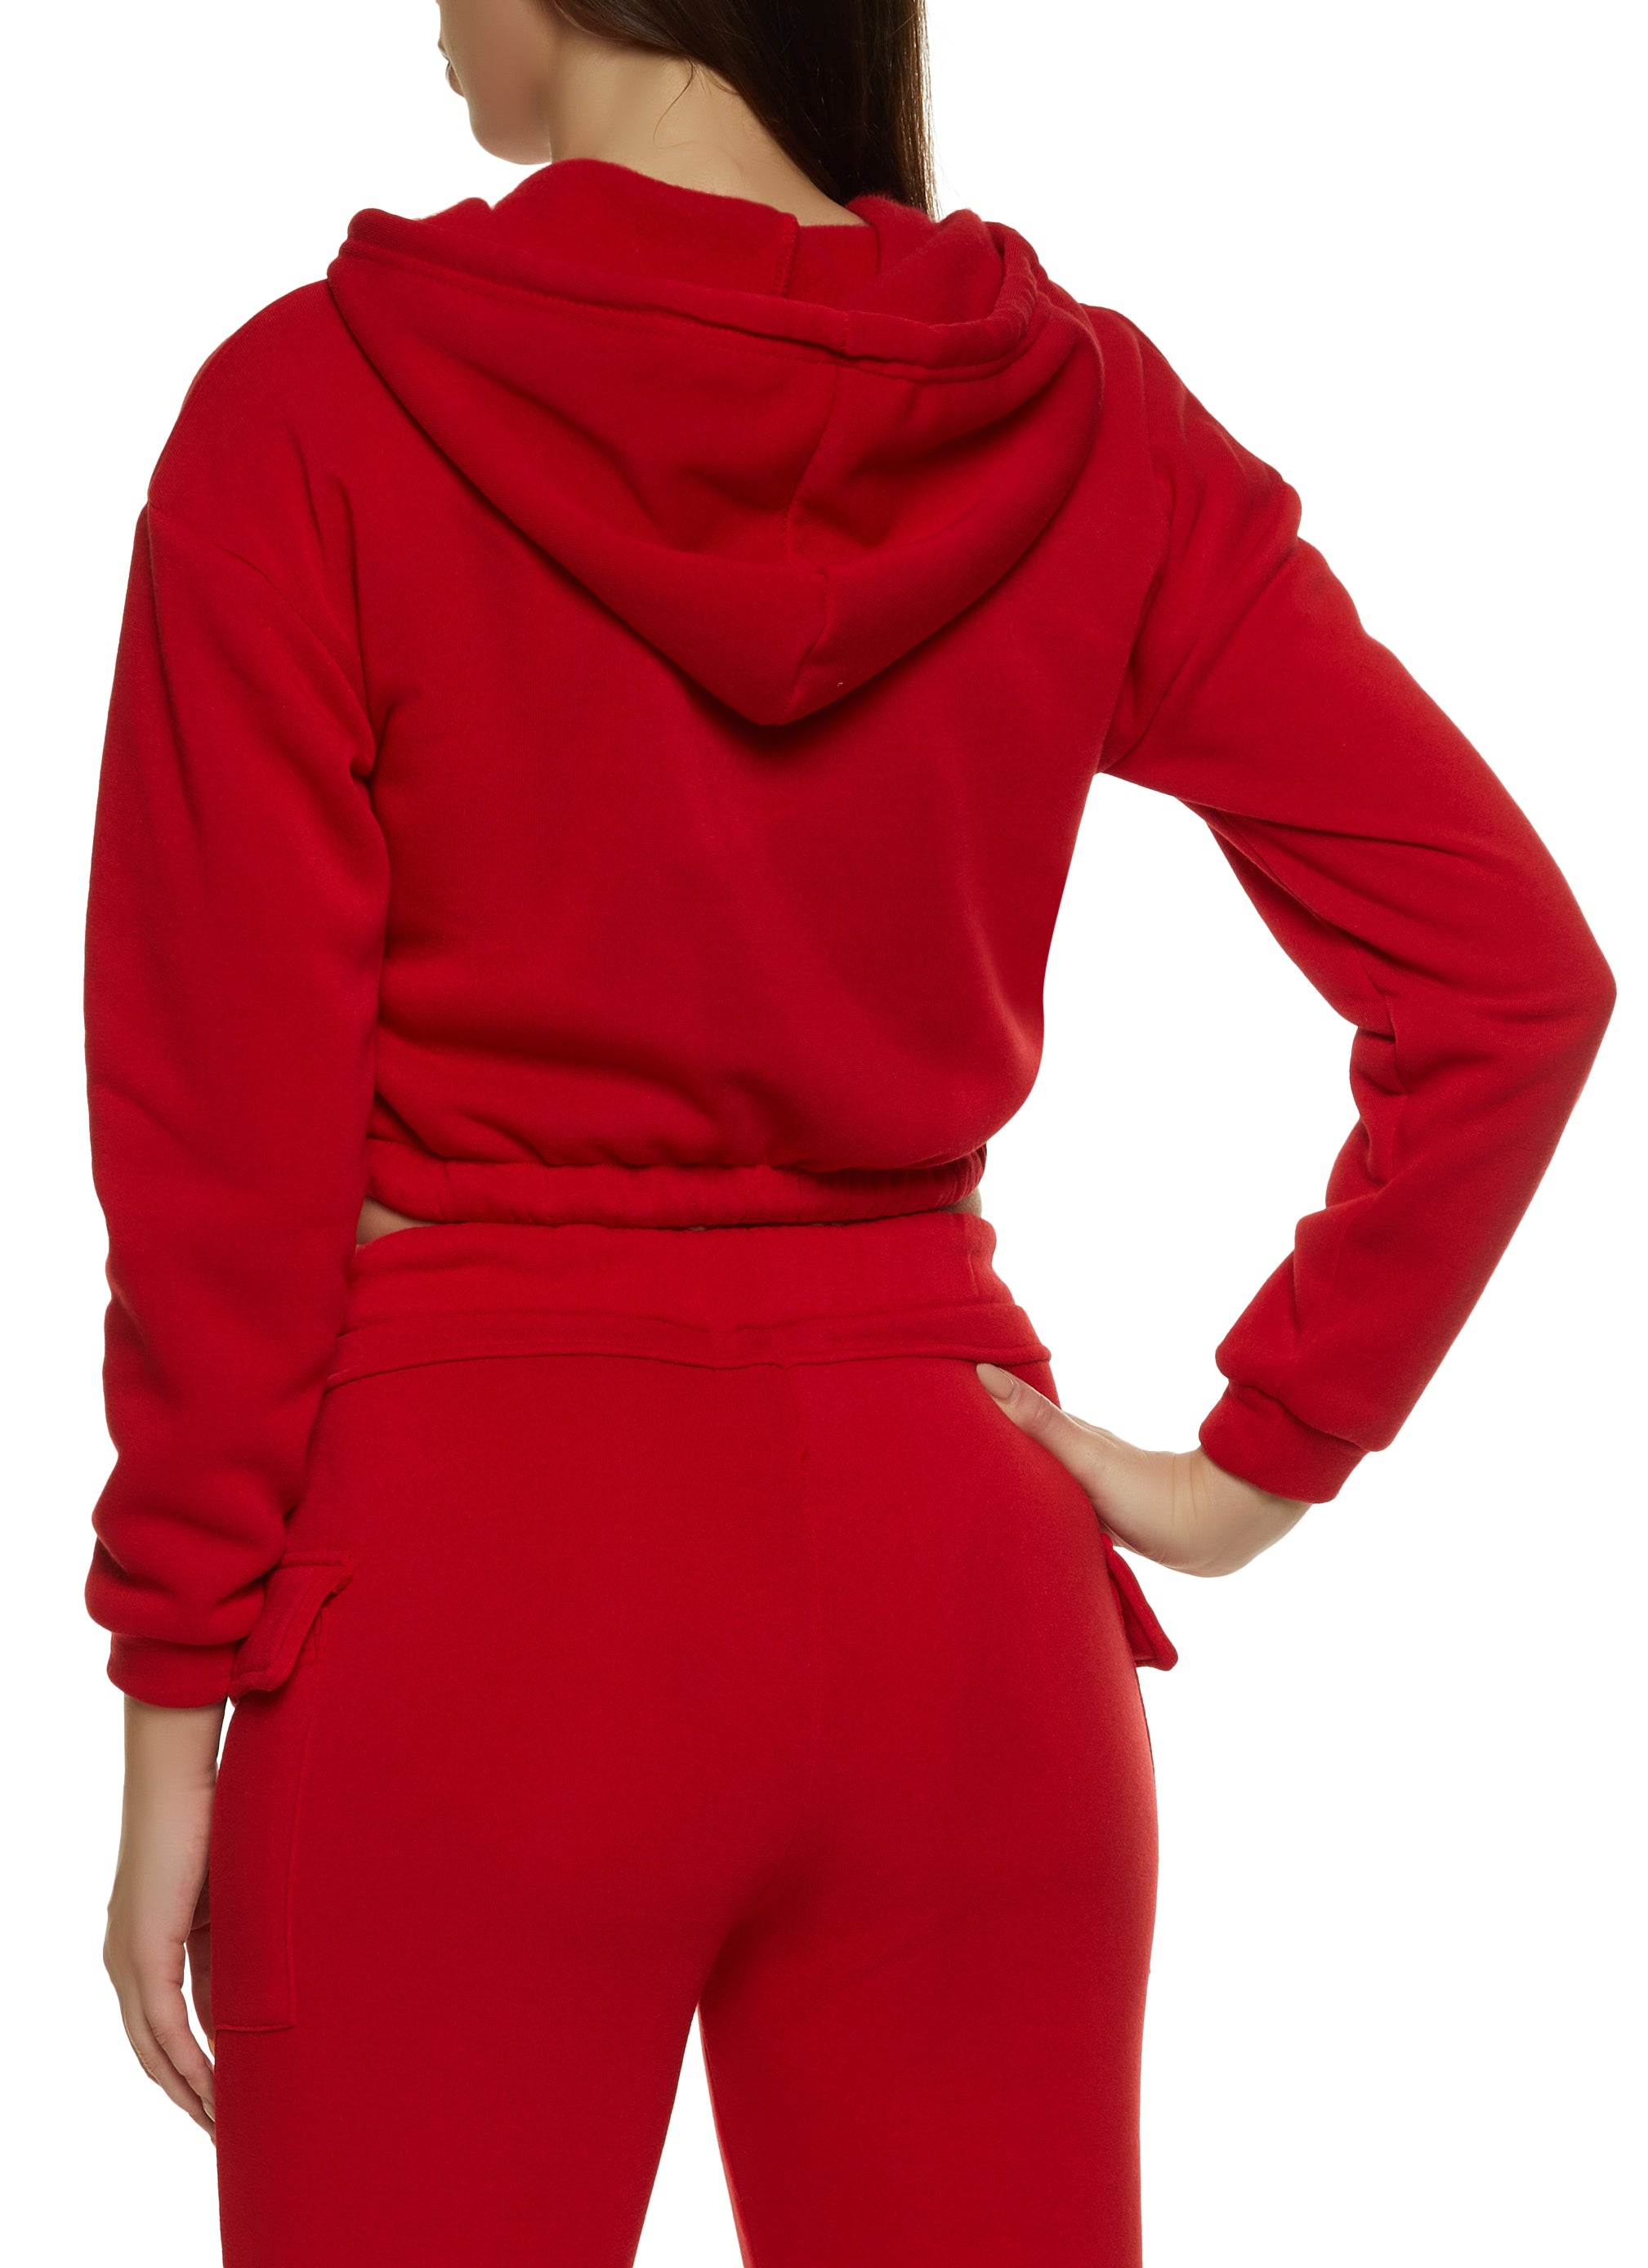 Buy Juicy Couture women plain pull on velour leggings pink Online